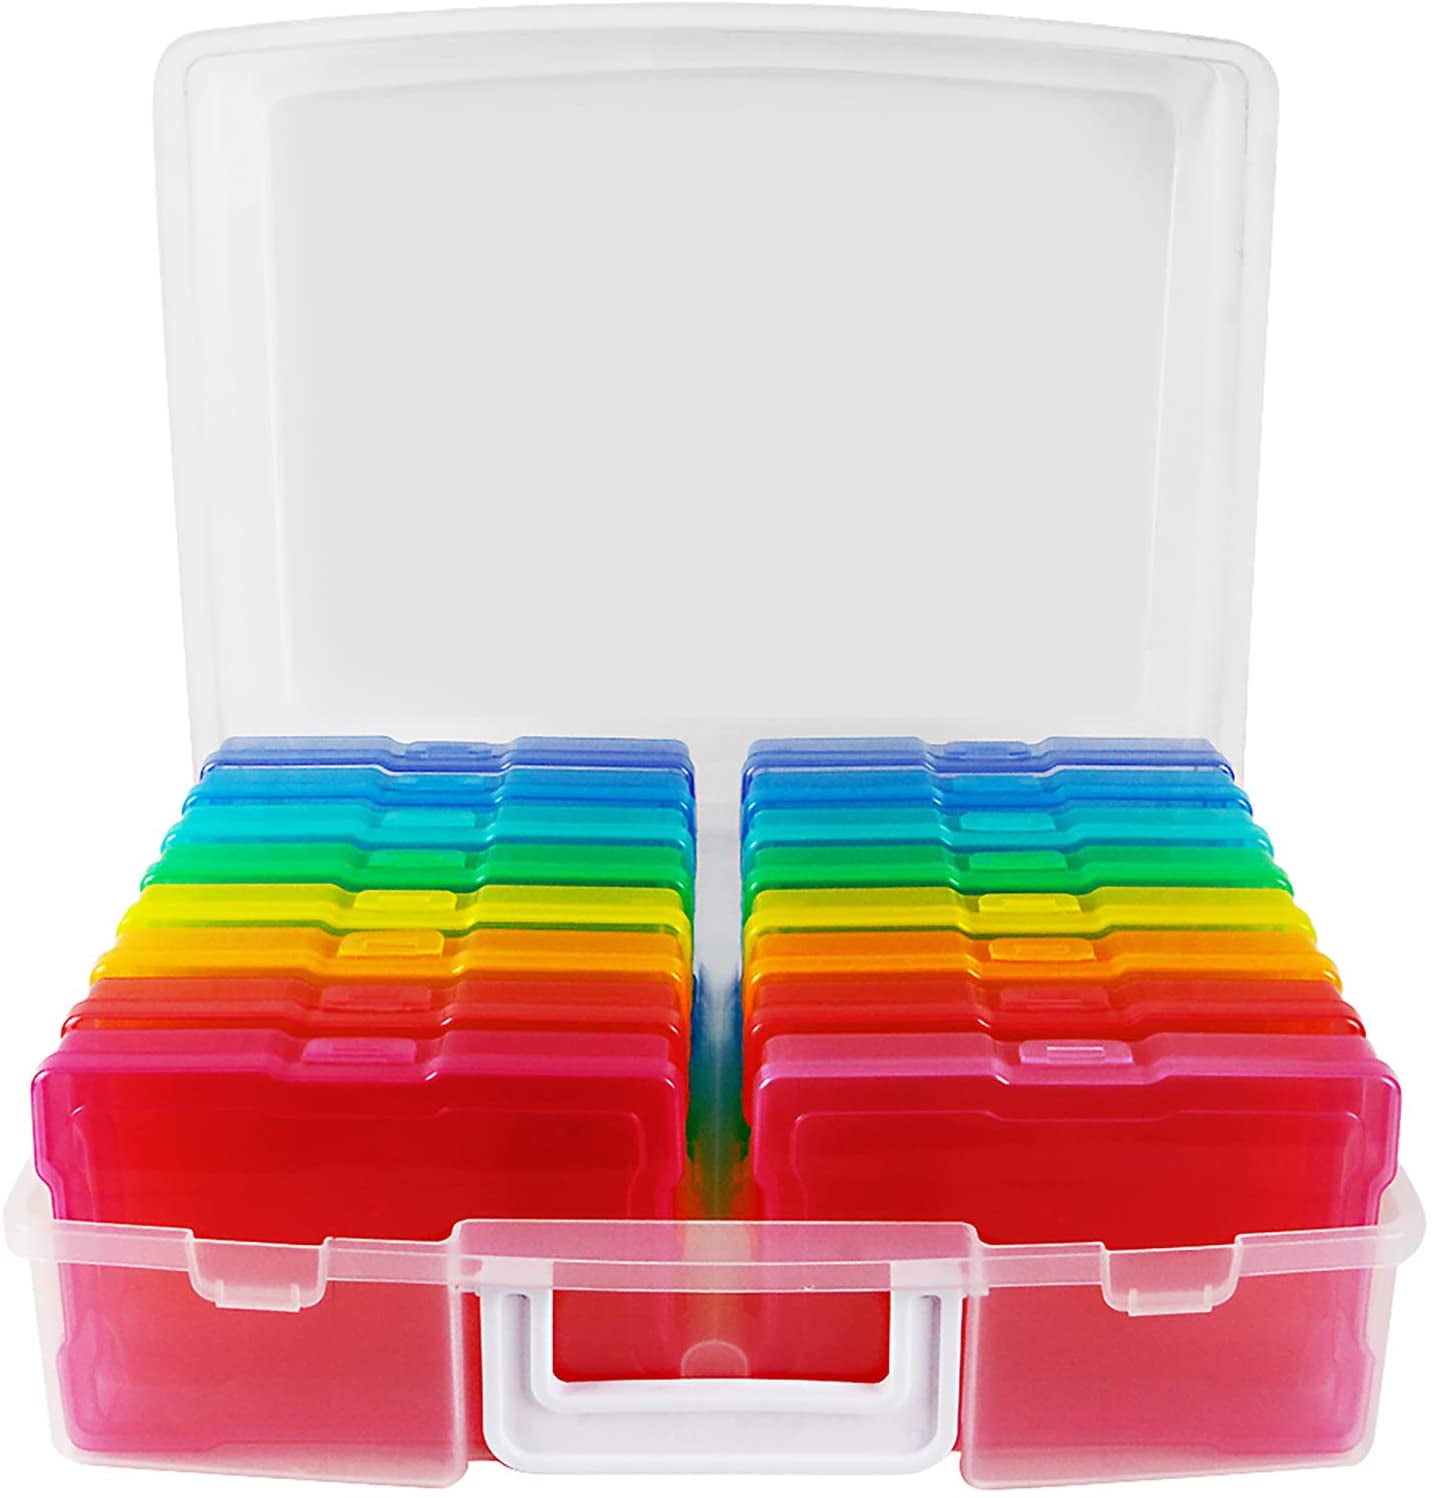 Details about   Transparent Plastic Storage Box Die Cutting Tool Handy Case Container Organizer 